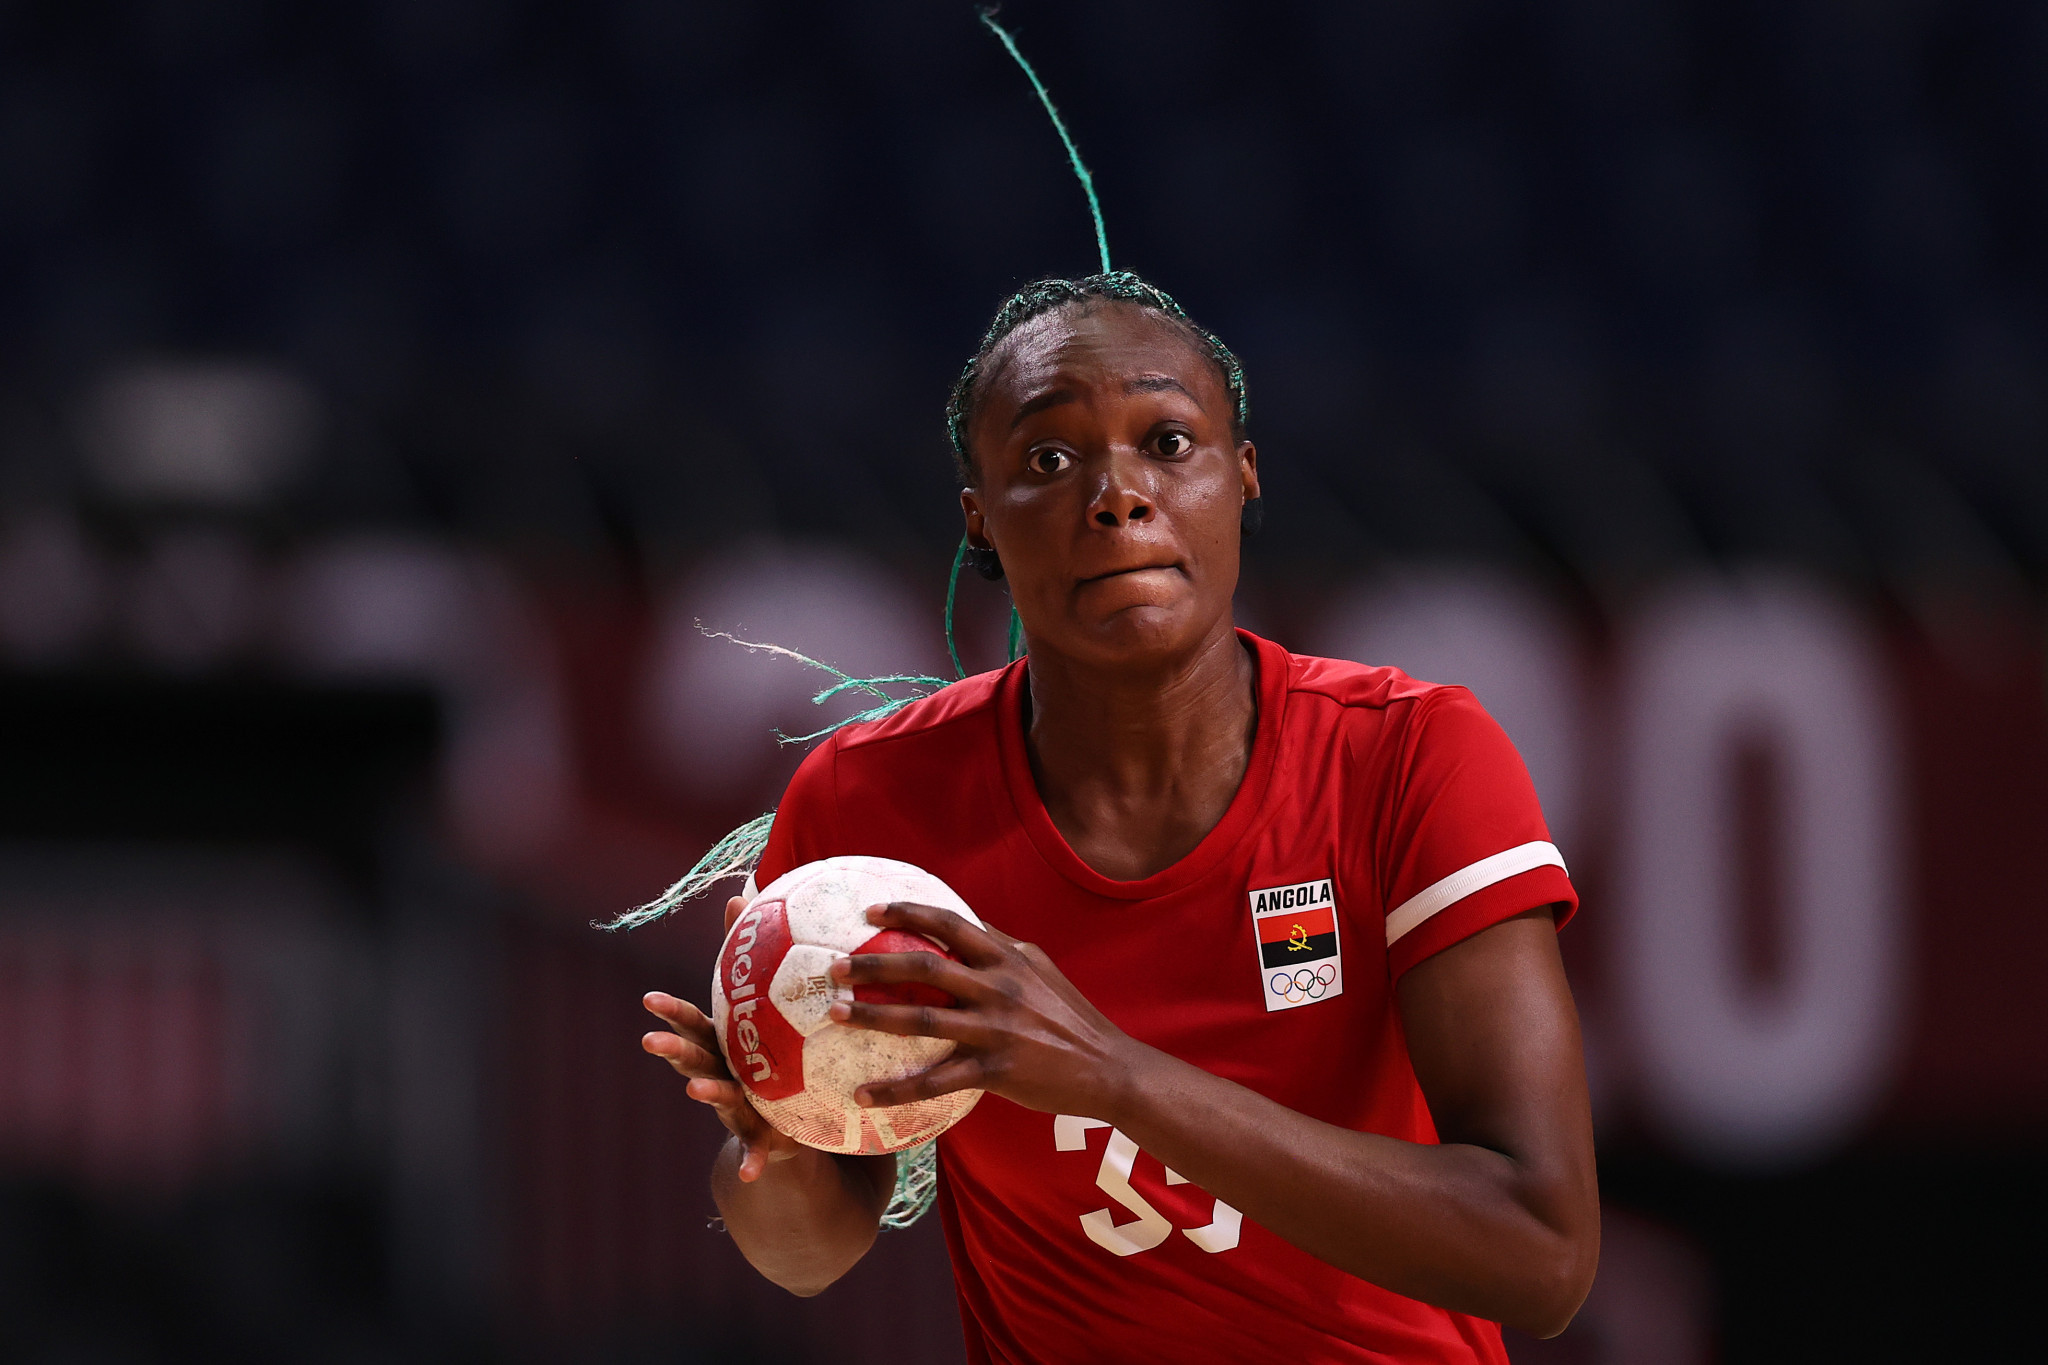 Angola book place at Paris 2024 women's handball tournament